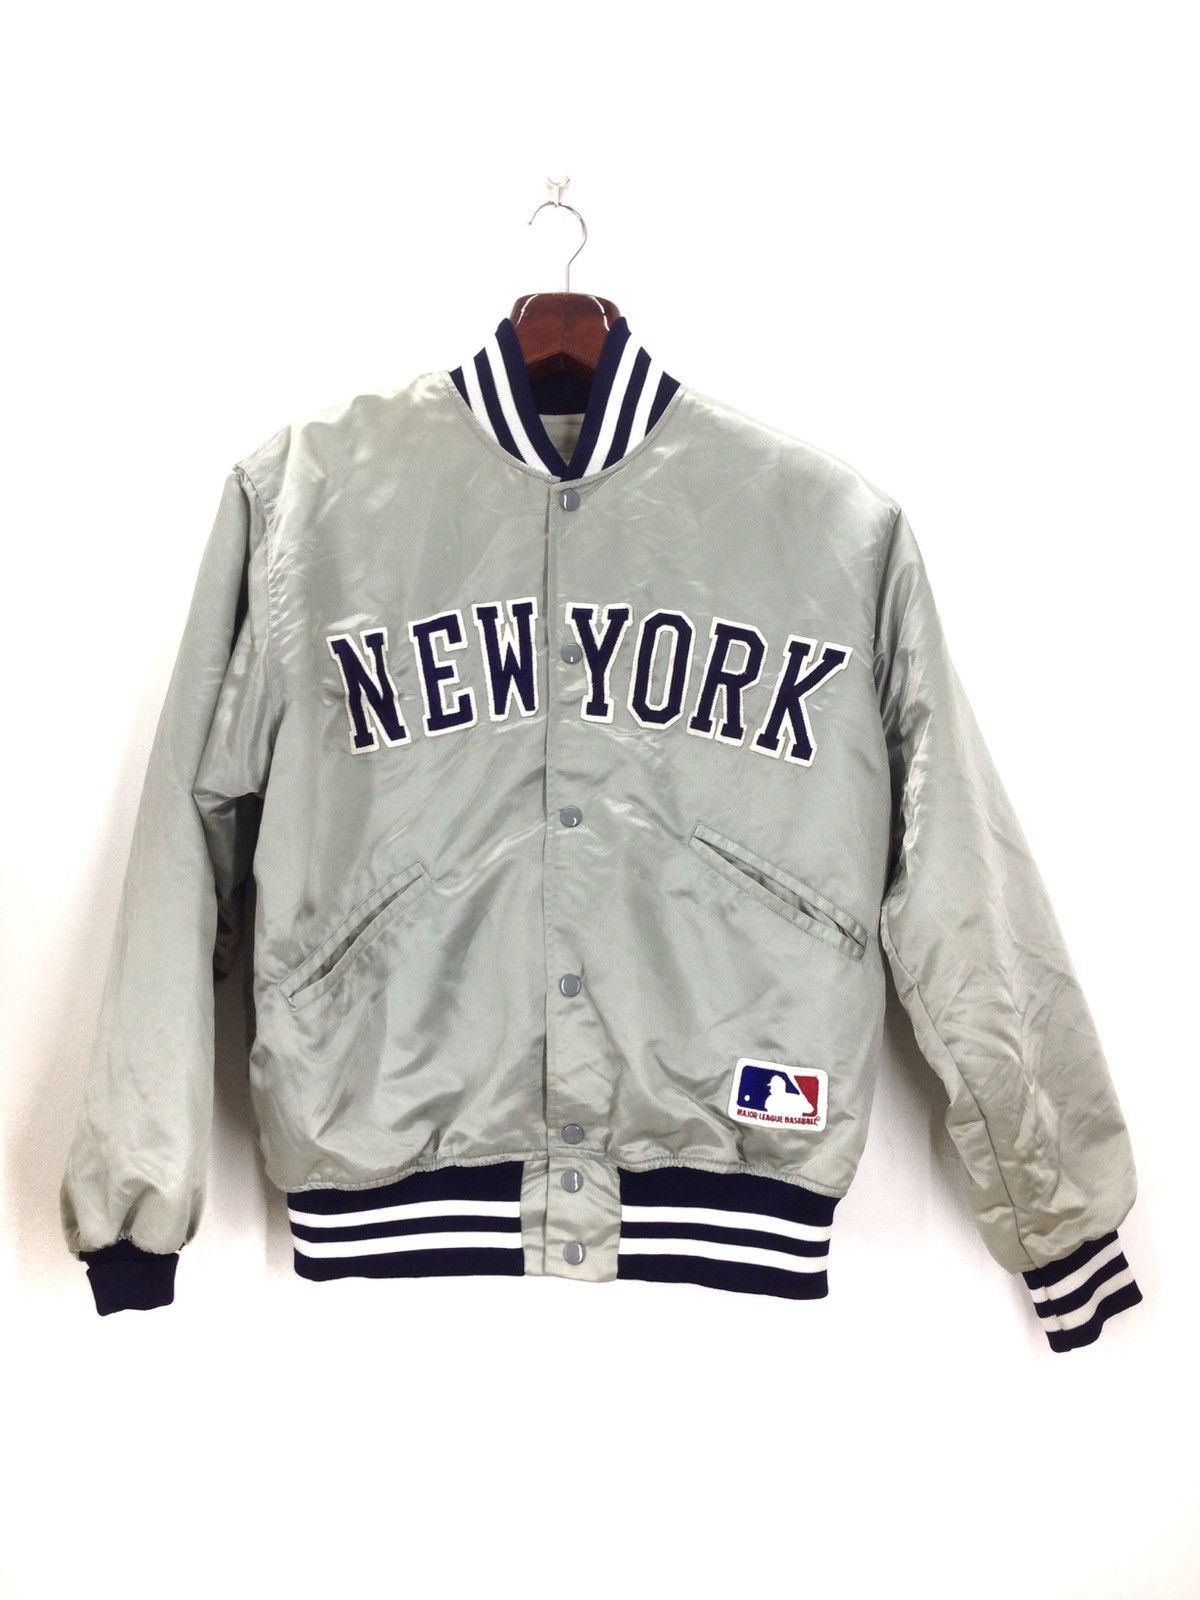 New York Yankees Men's Large Starter Jacket, Used Grey Color